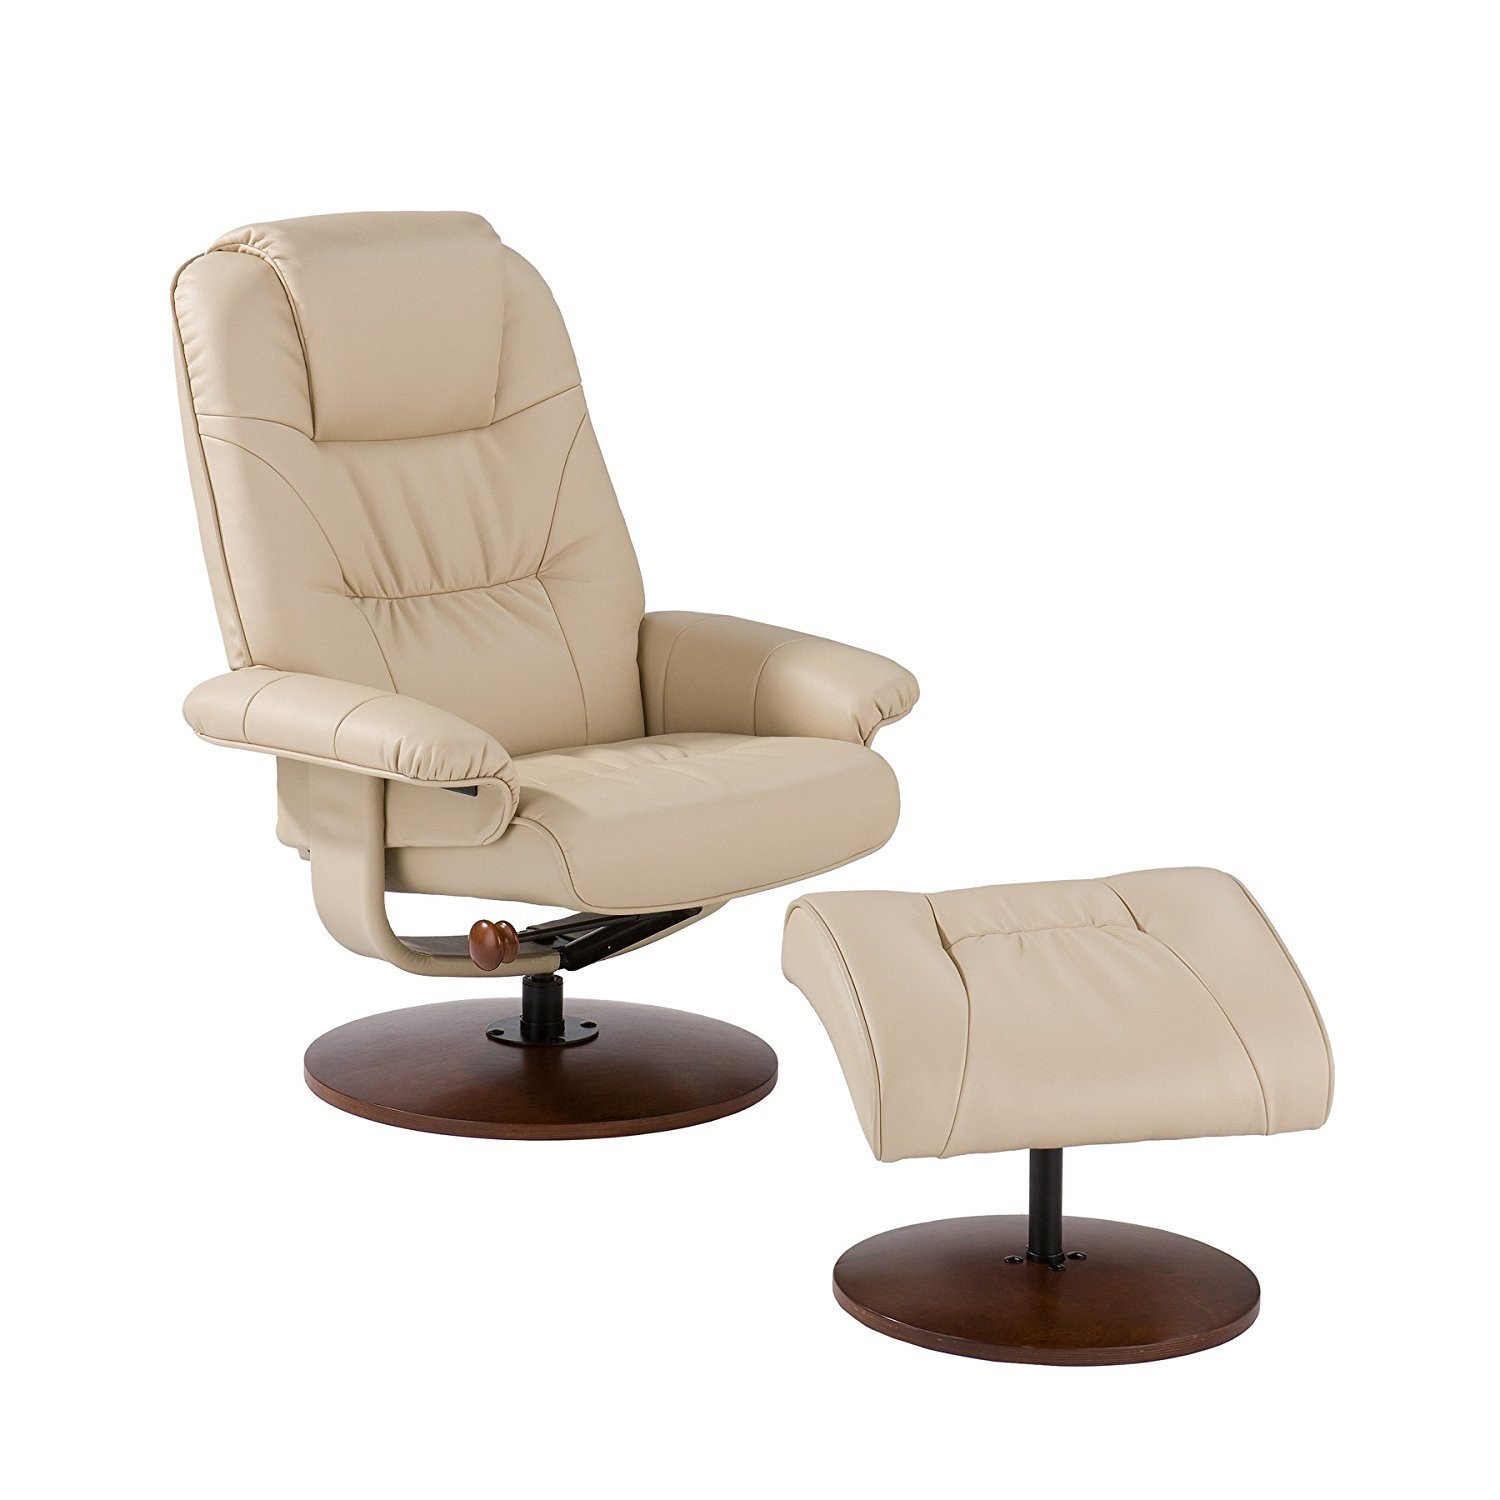 Ergonomic Living Room Chairs
 ergonomic living room chair Home Furniture Design